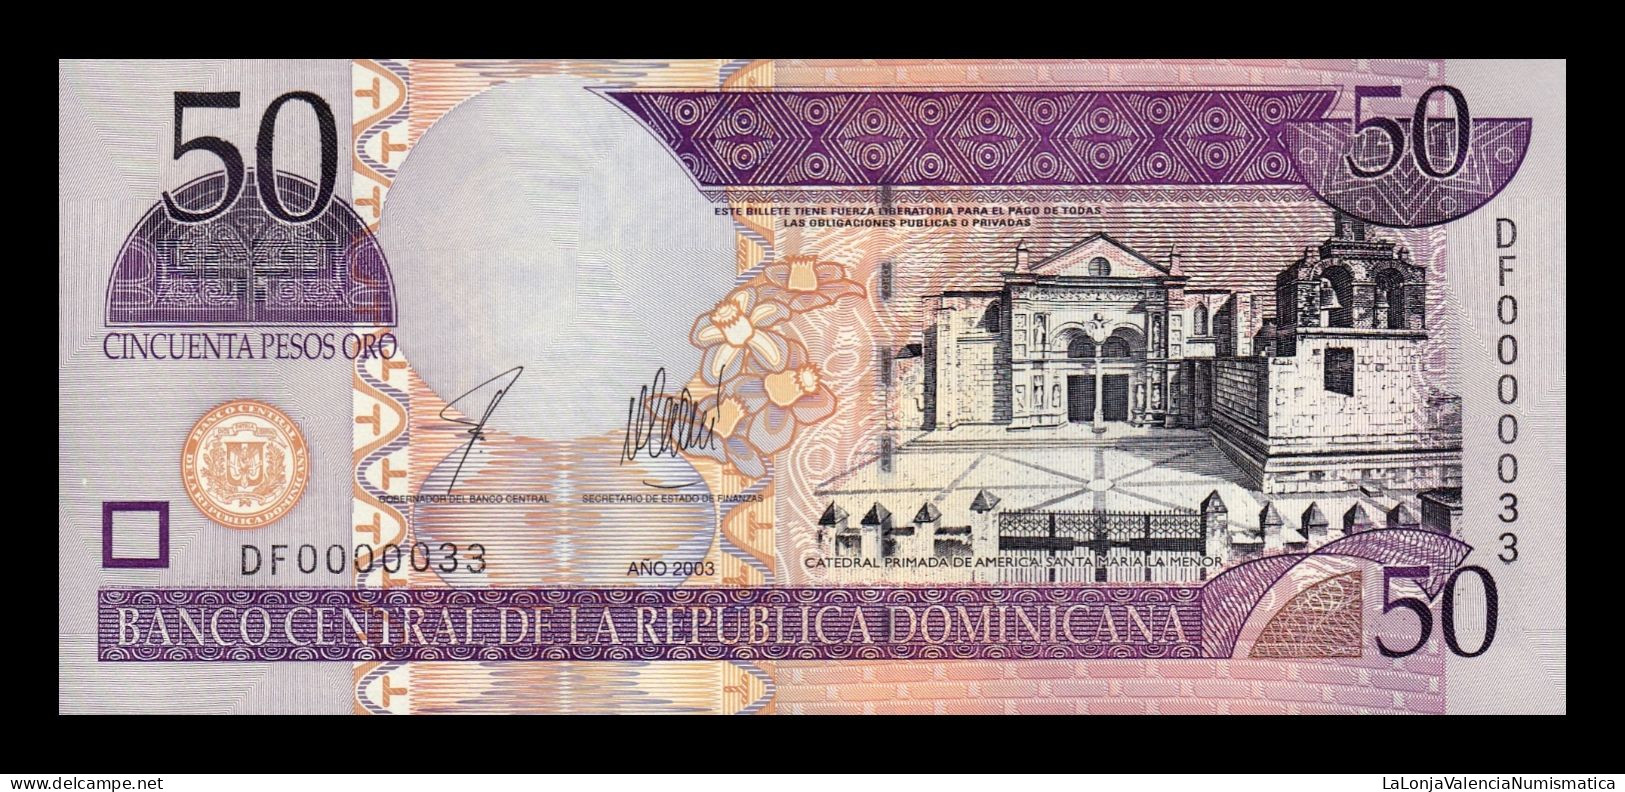 República Dominicana 50 Pesos Oro 2003 Pick 170b Low Serial 33 Sc Unc - Dominicaine